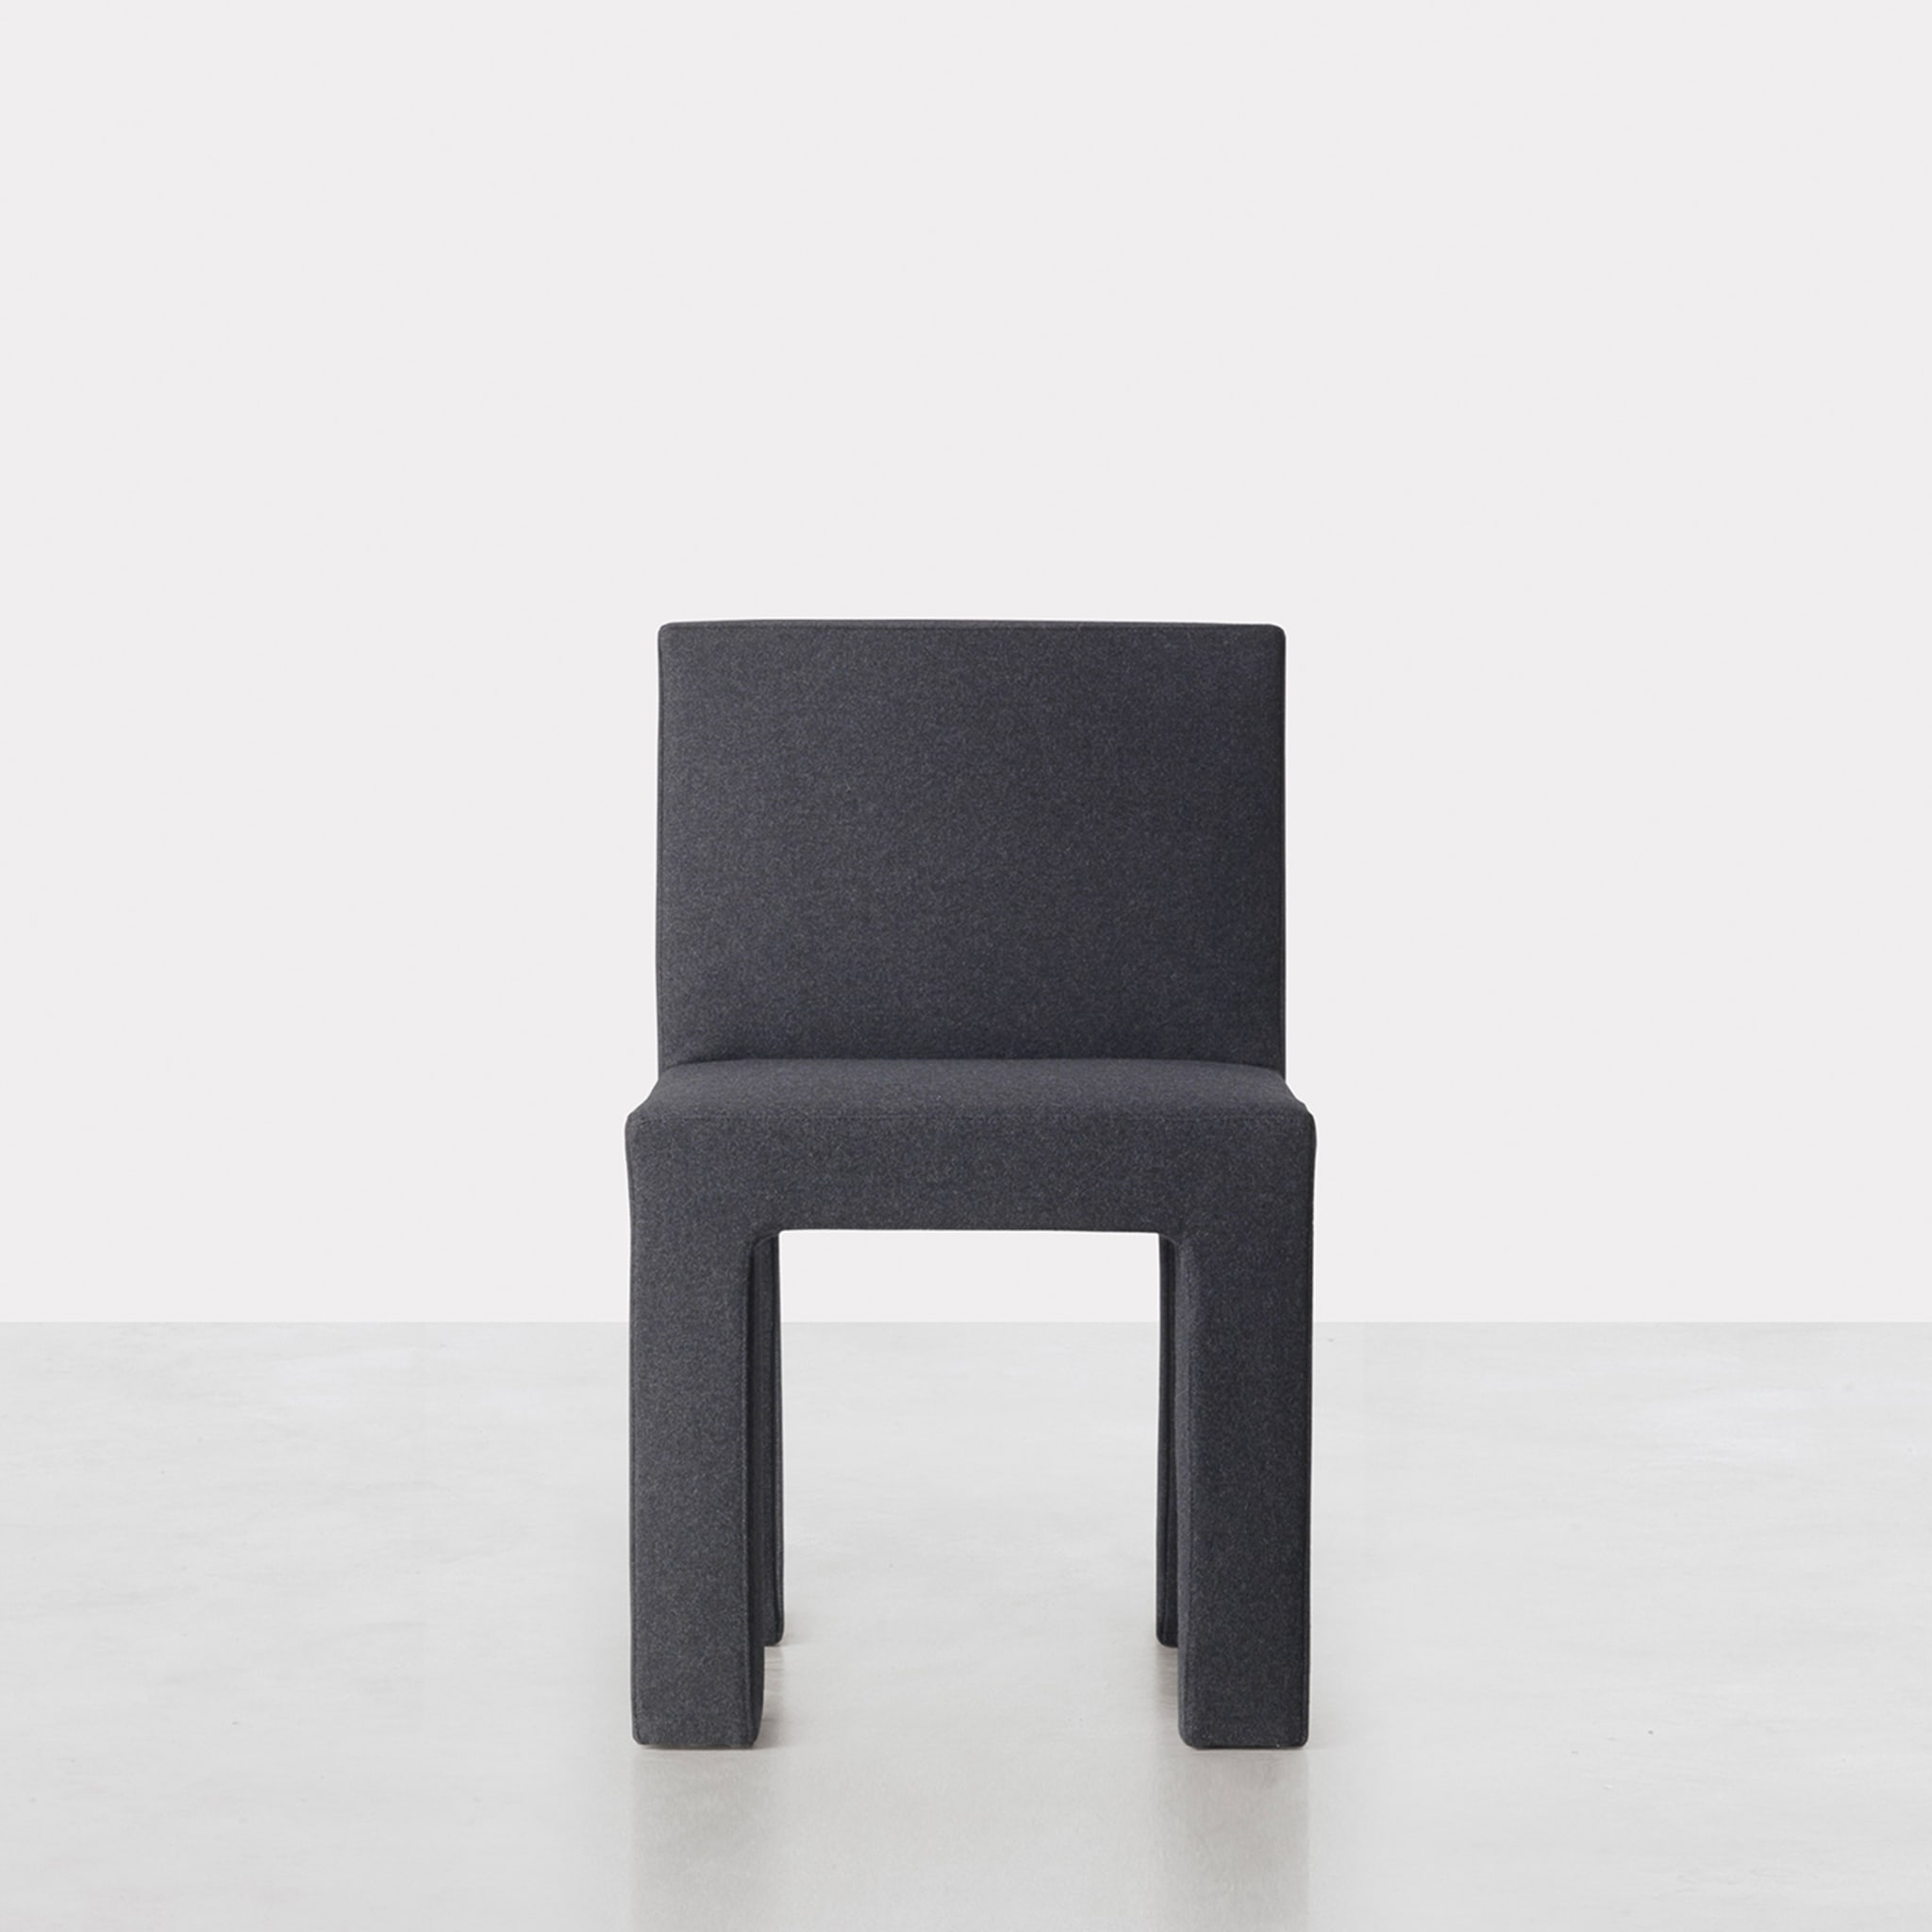 Quadrata Grauer Stuhl von Dainelli Studio - Alternative Ansicht 1